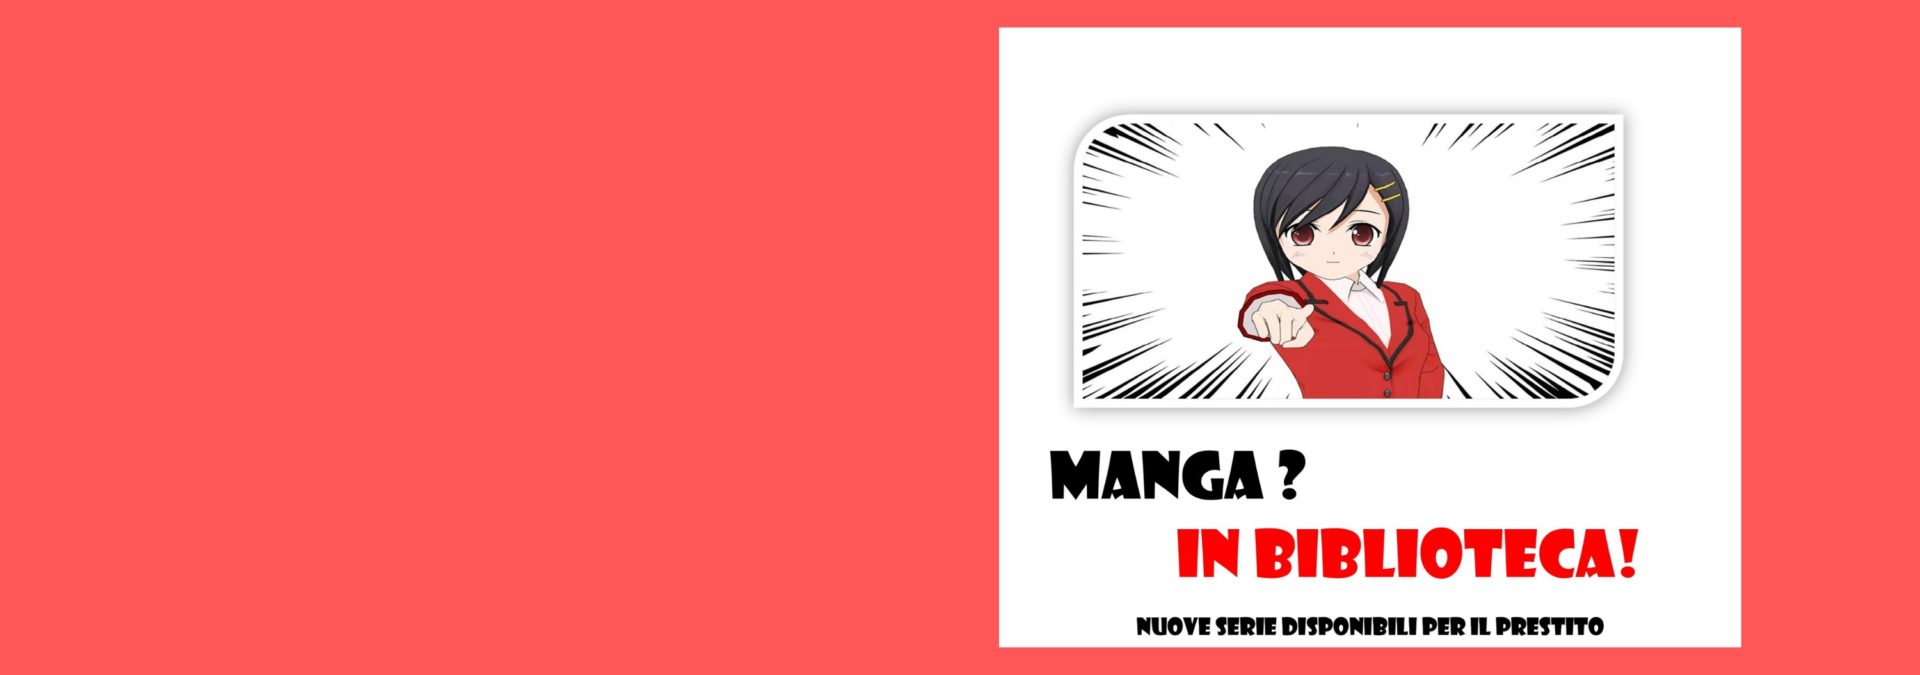 Vieni a scoprire in biblioteca le nuove serie manga!